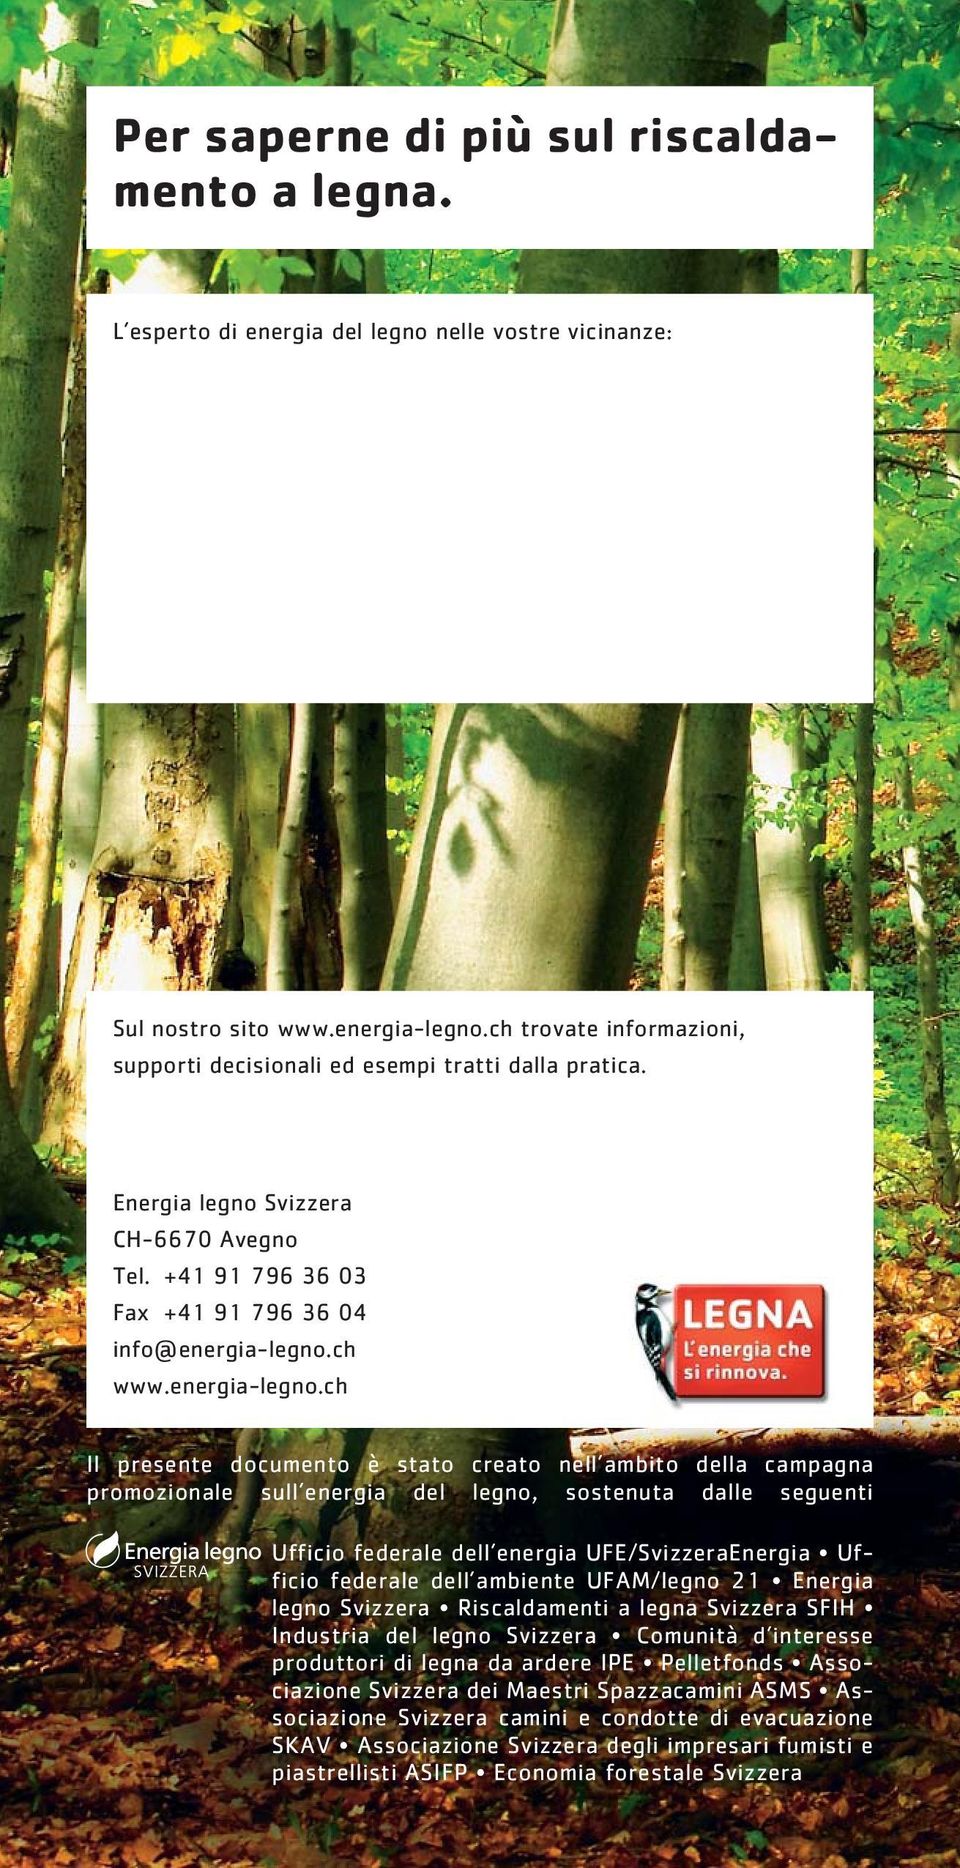 ch www.energia-legno.